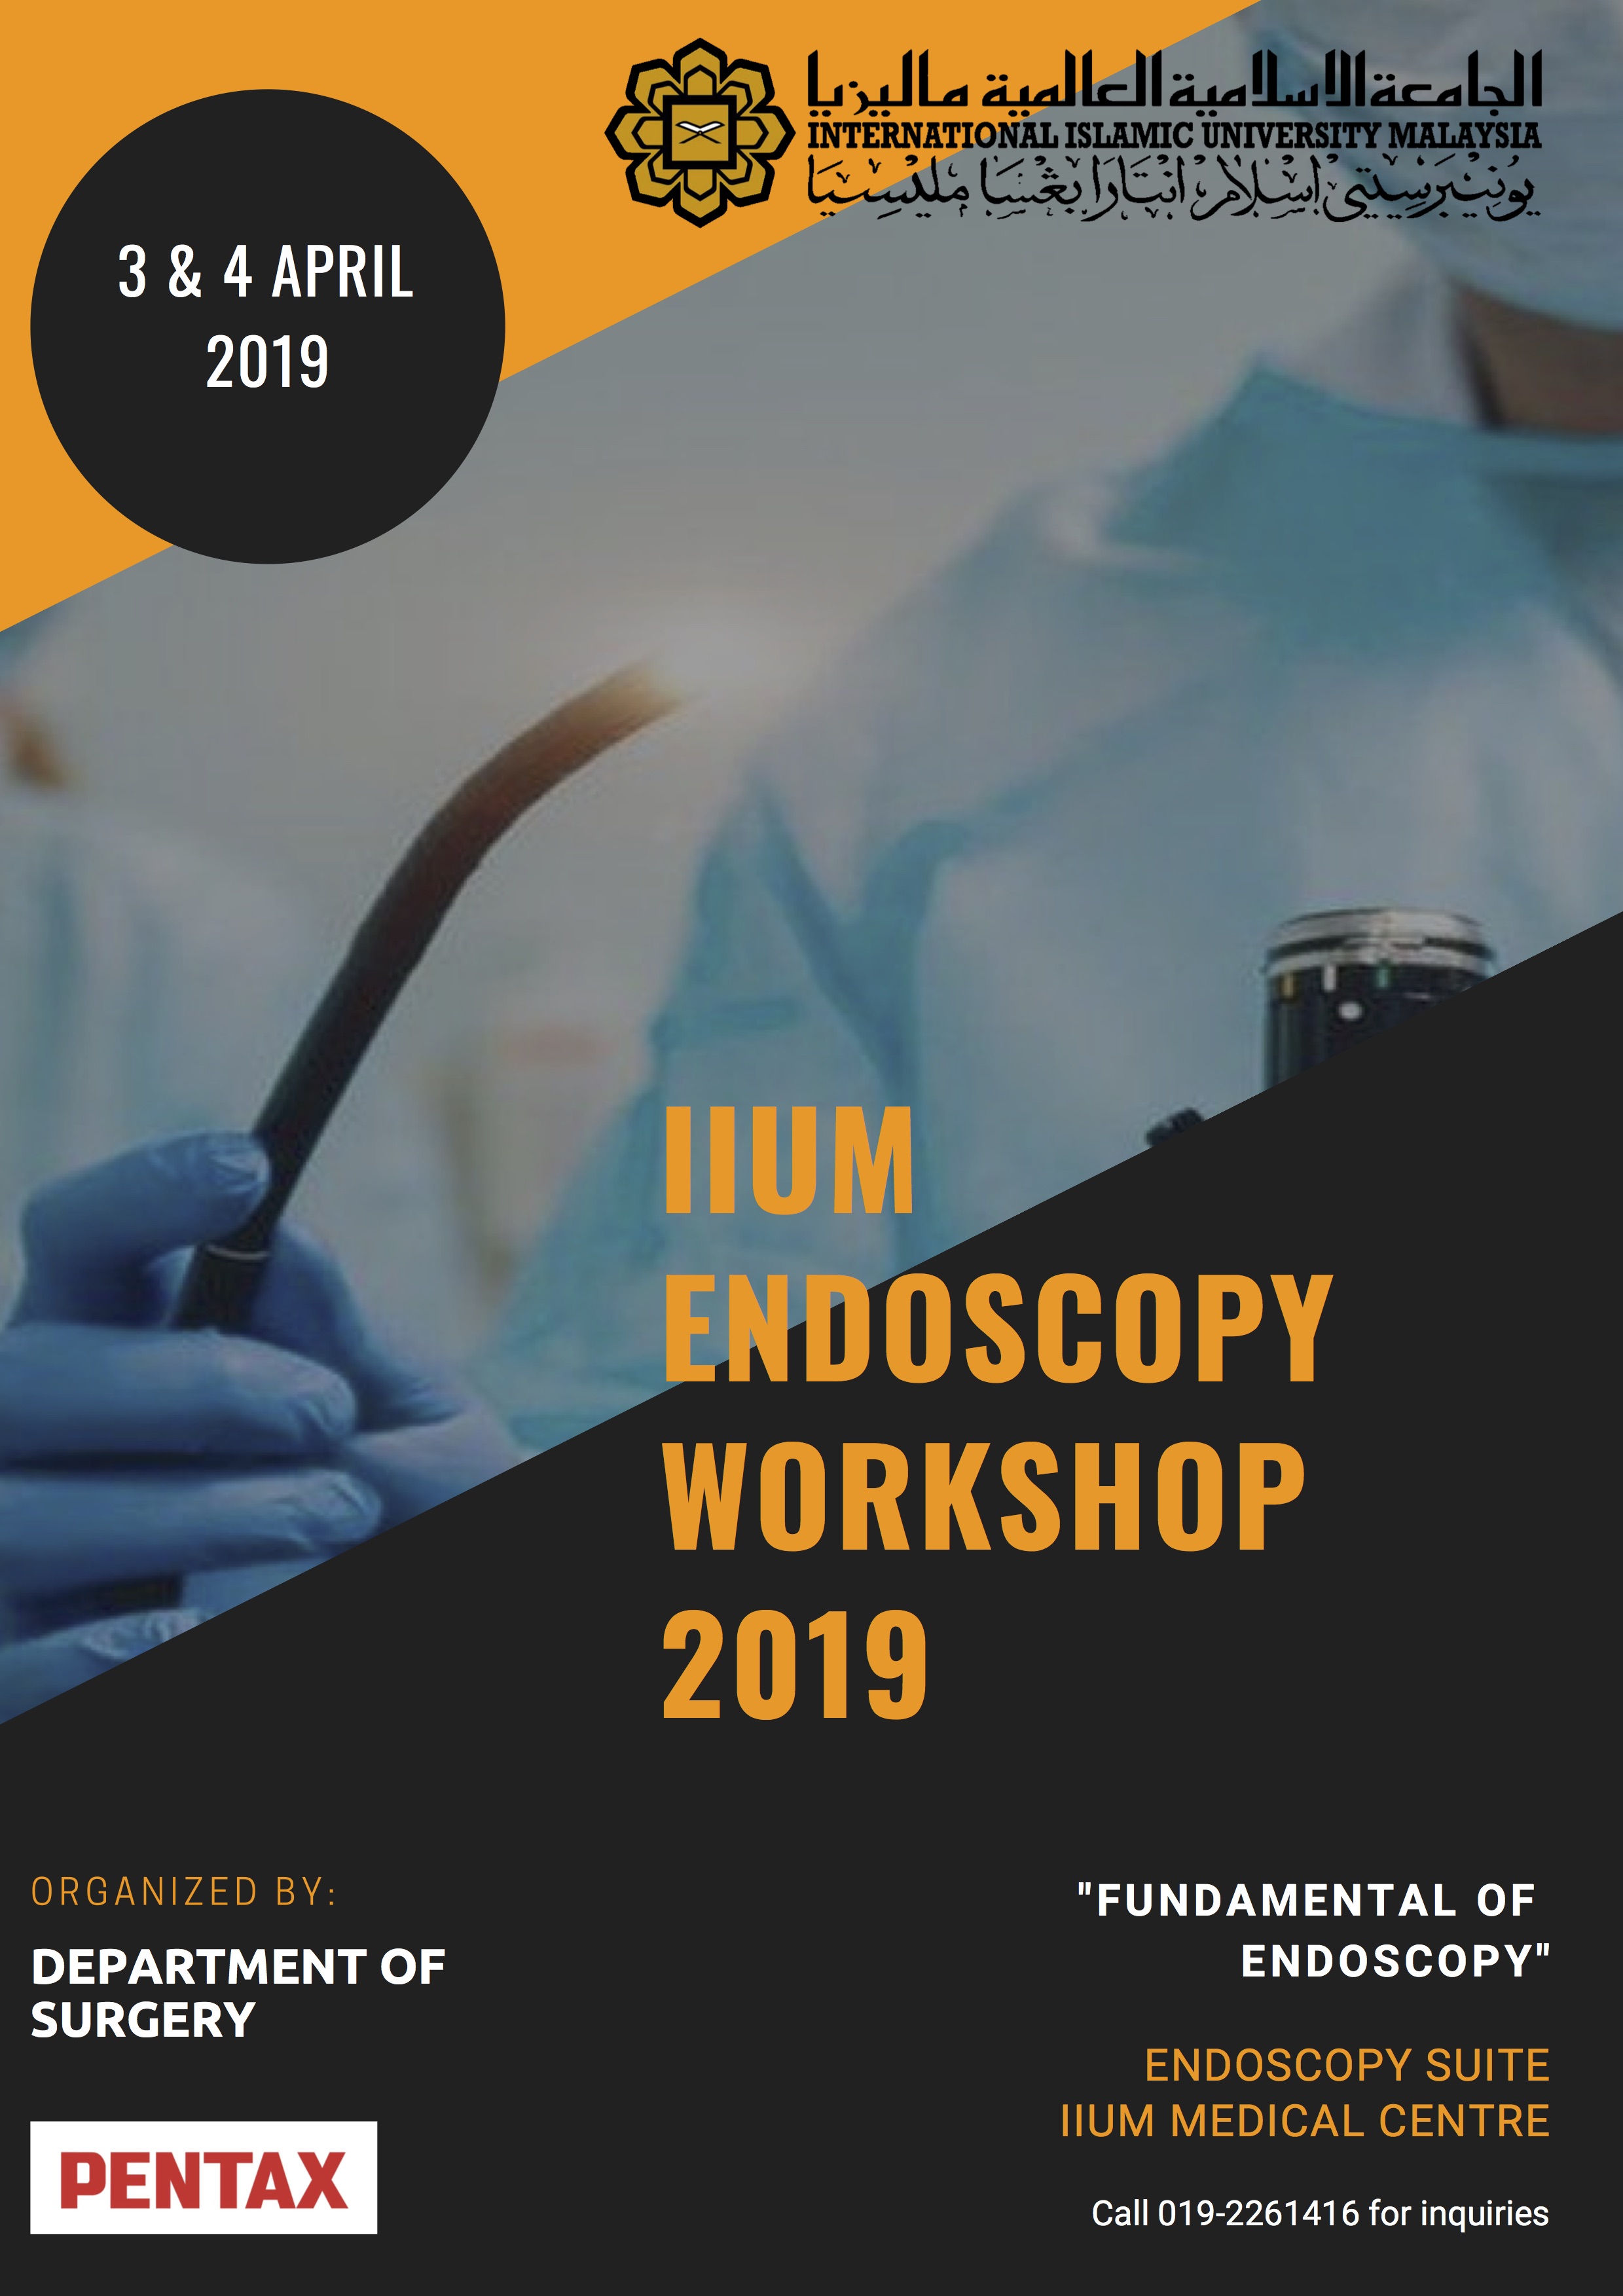 IIUM Endoscopy Workshop 2019 - "Fundamental of Endoscopy"